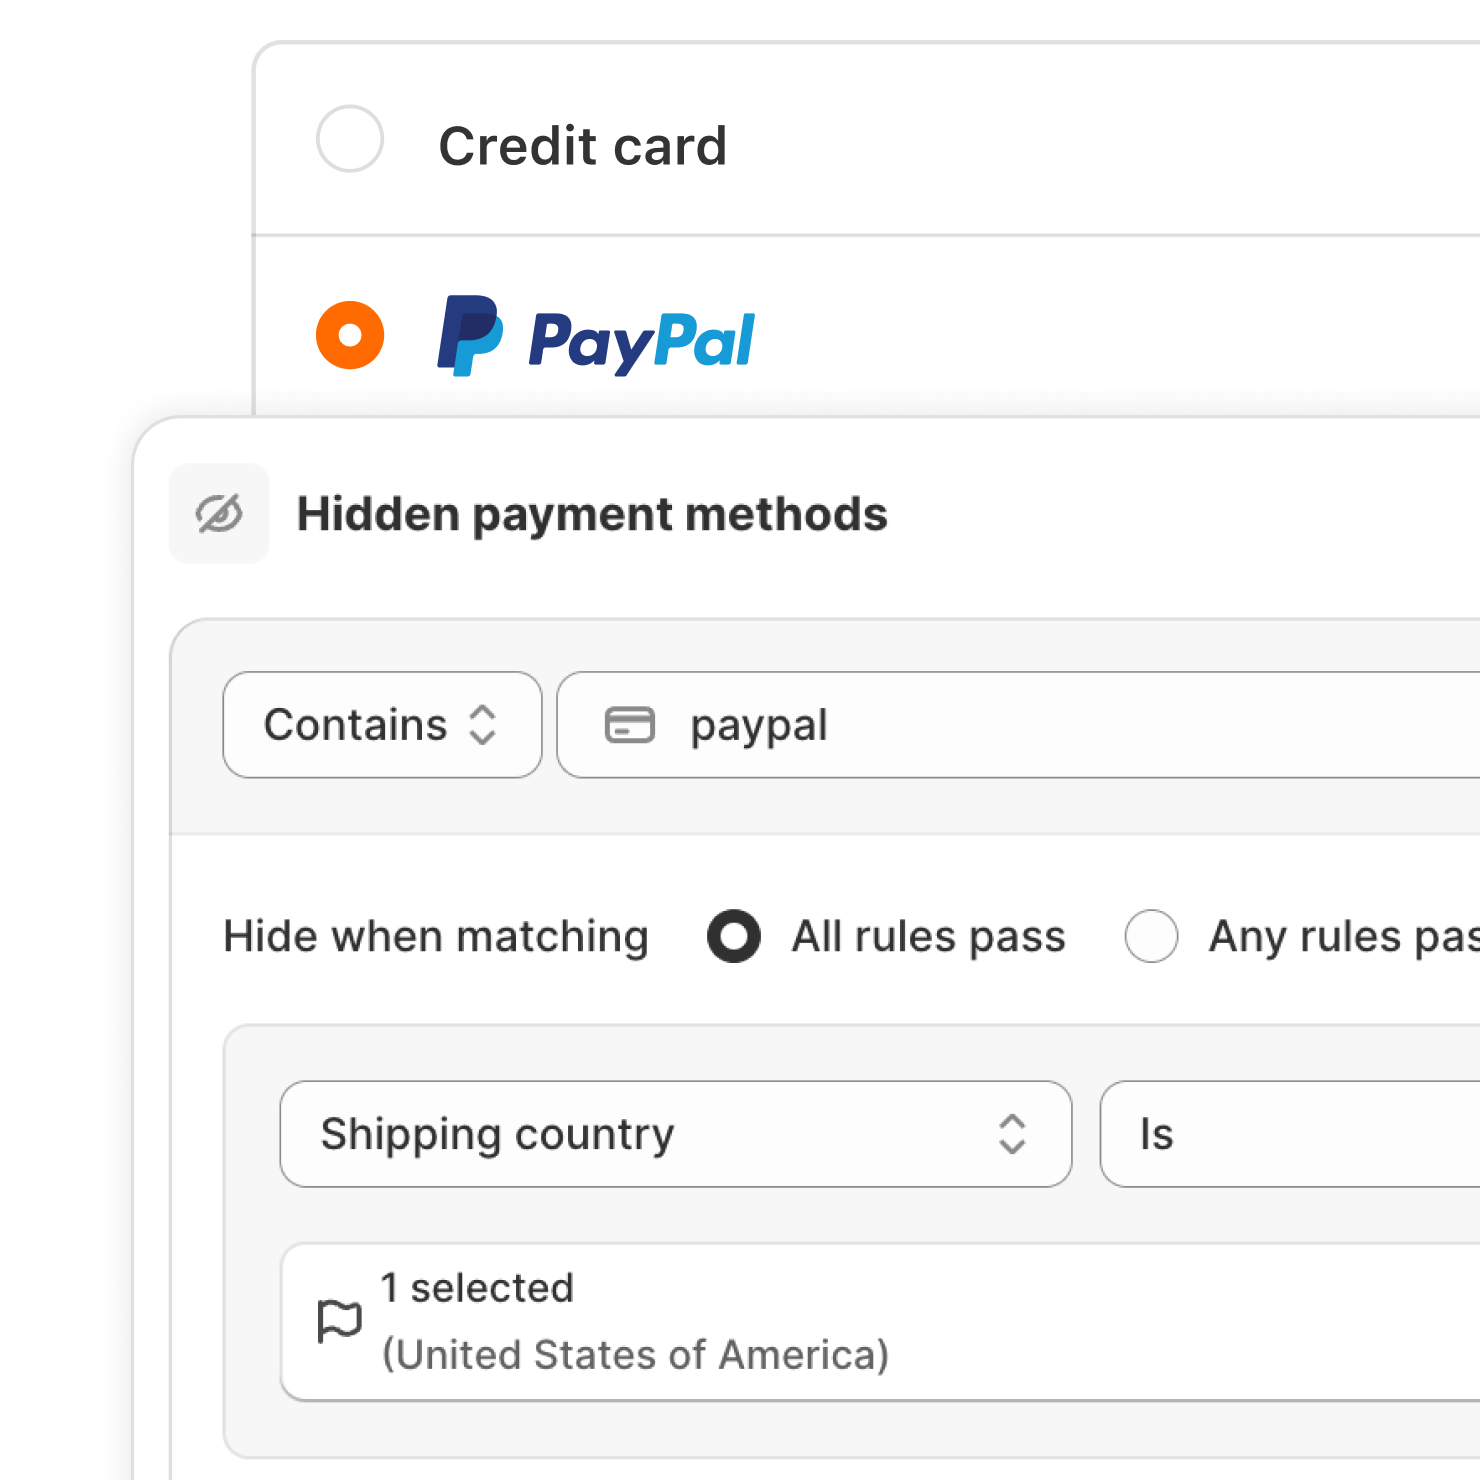 Hide payment methods image